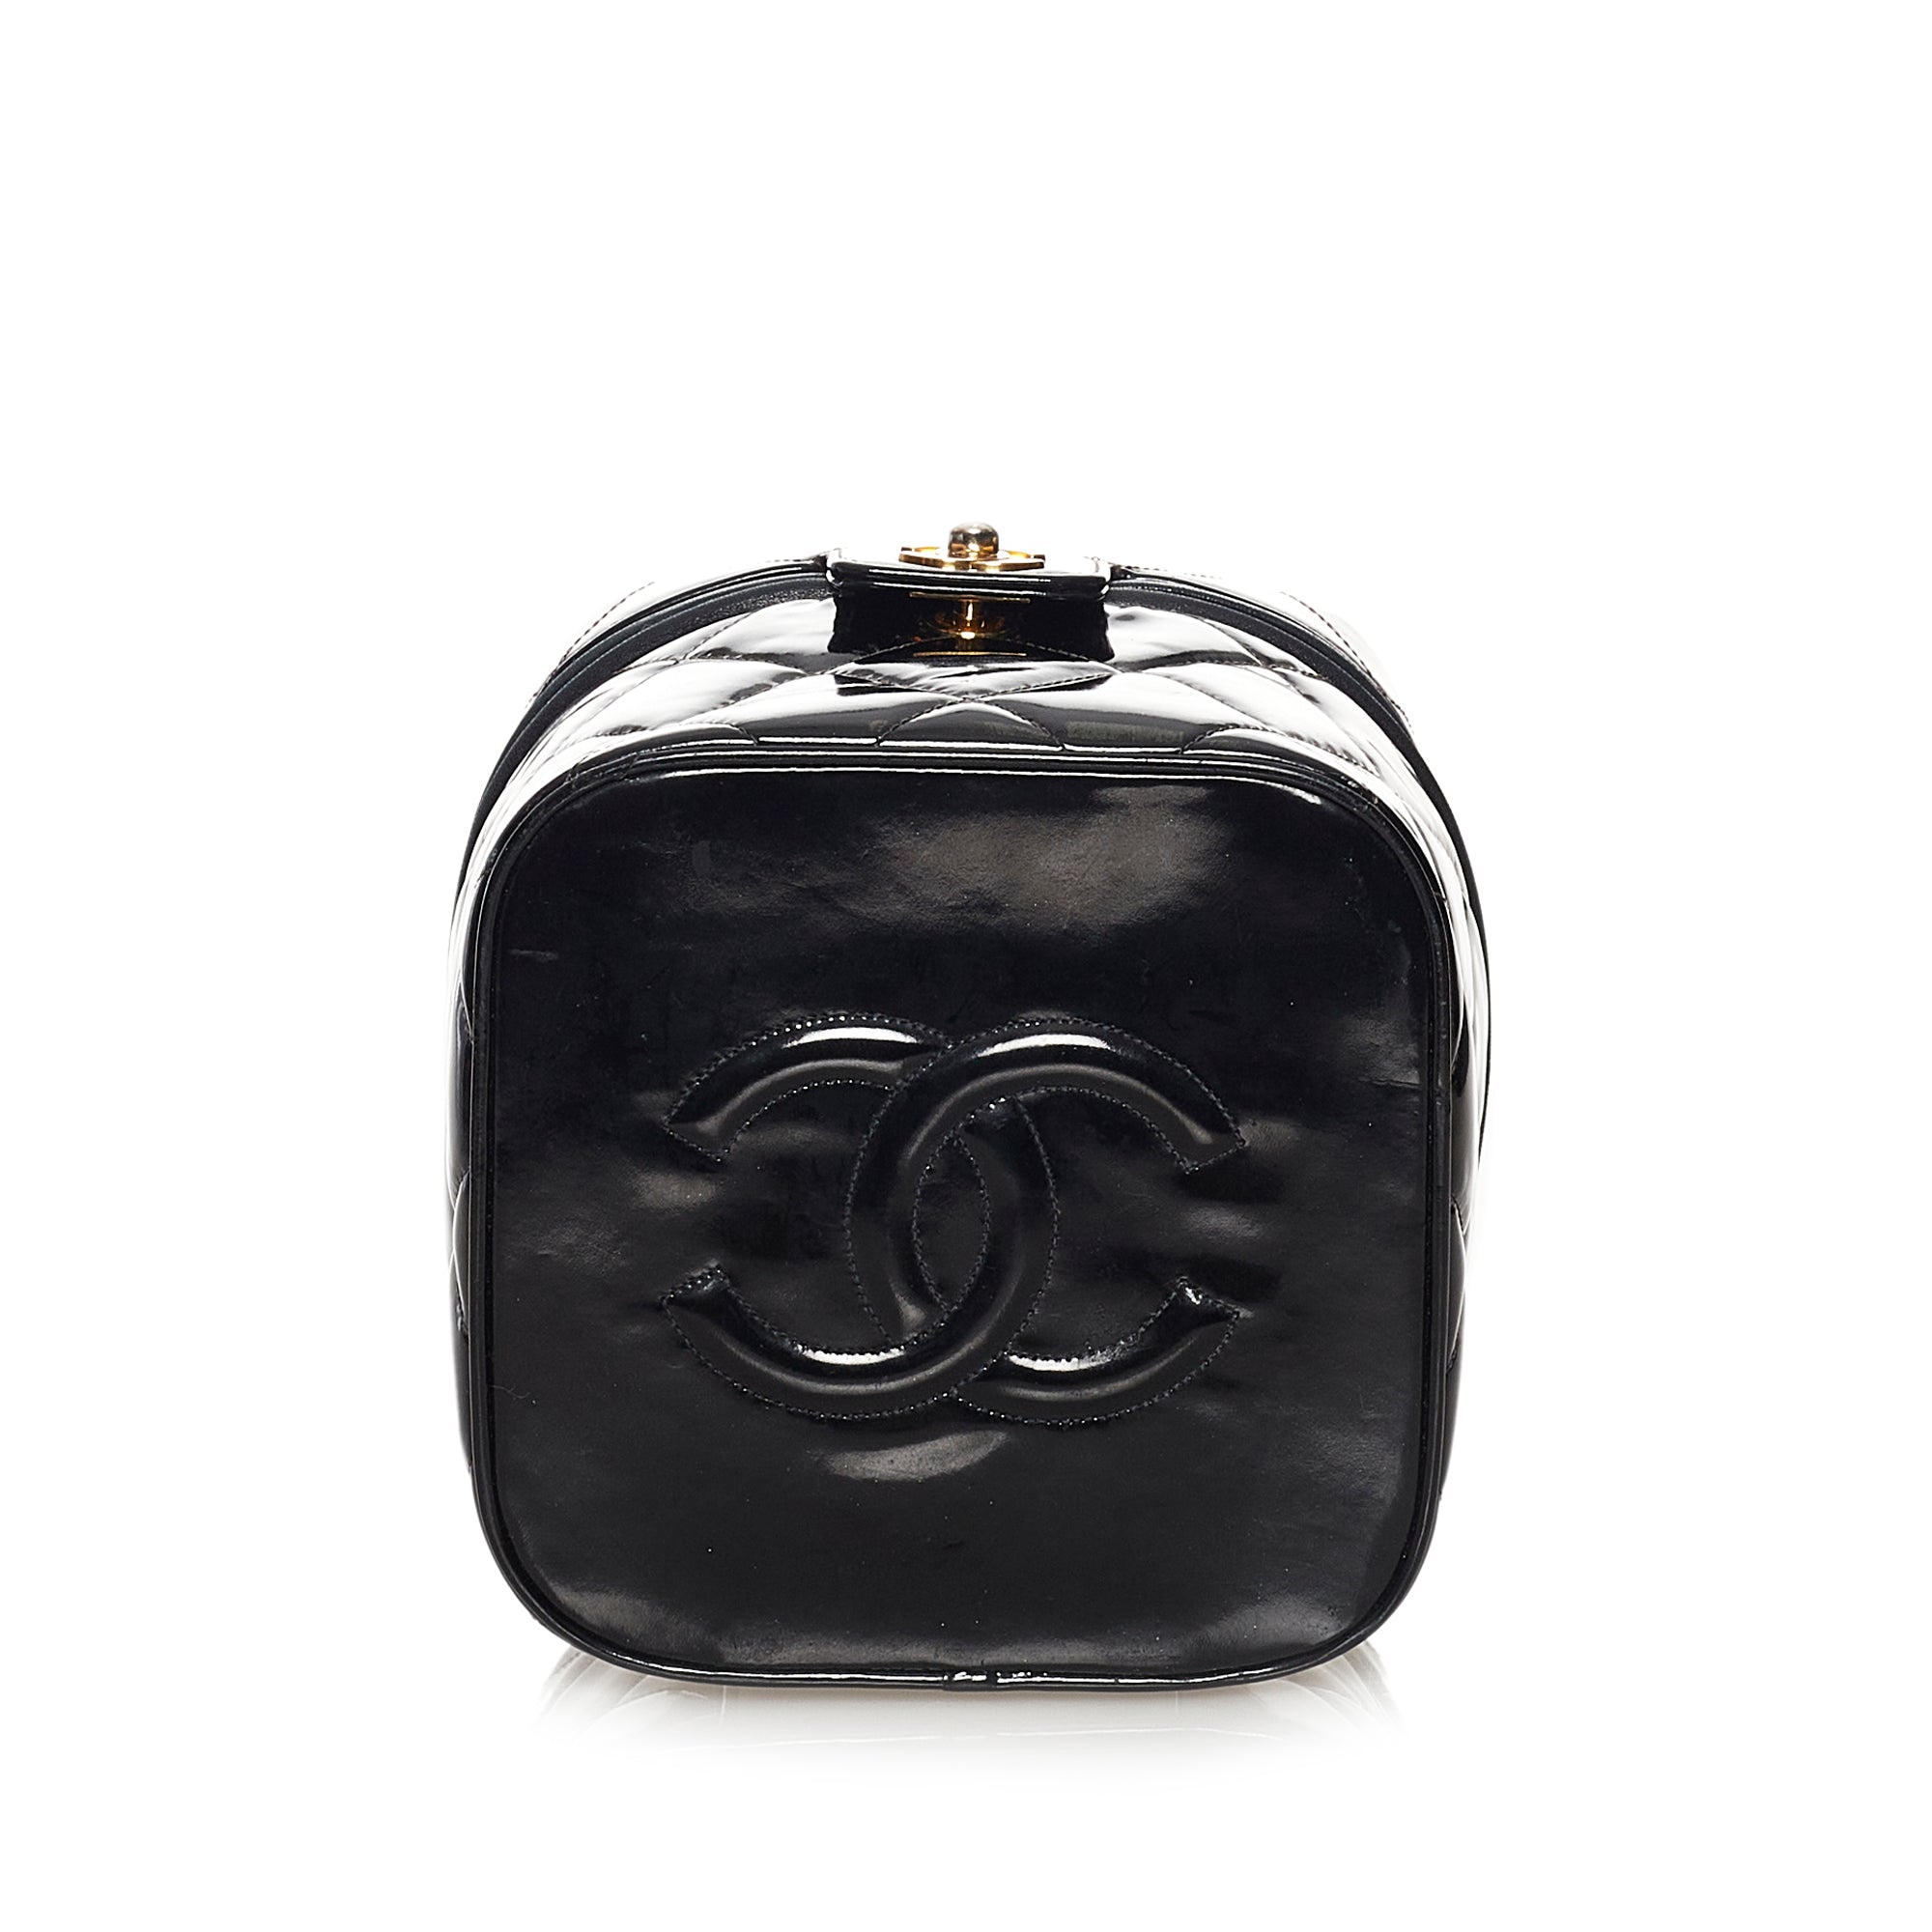 Chanel Chanel Vanity shoulder bag in patent matelassé leather